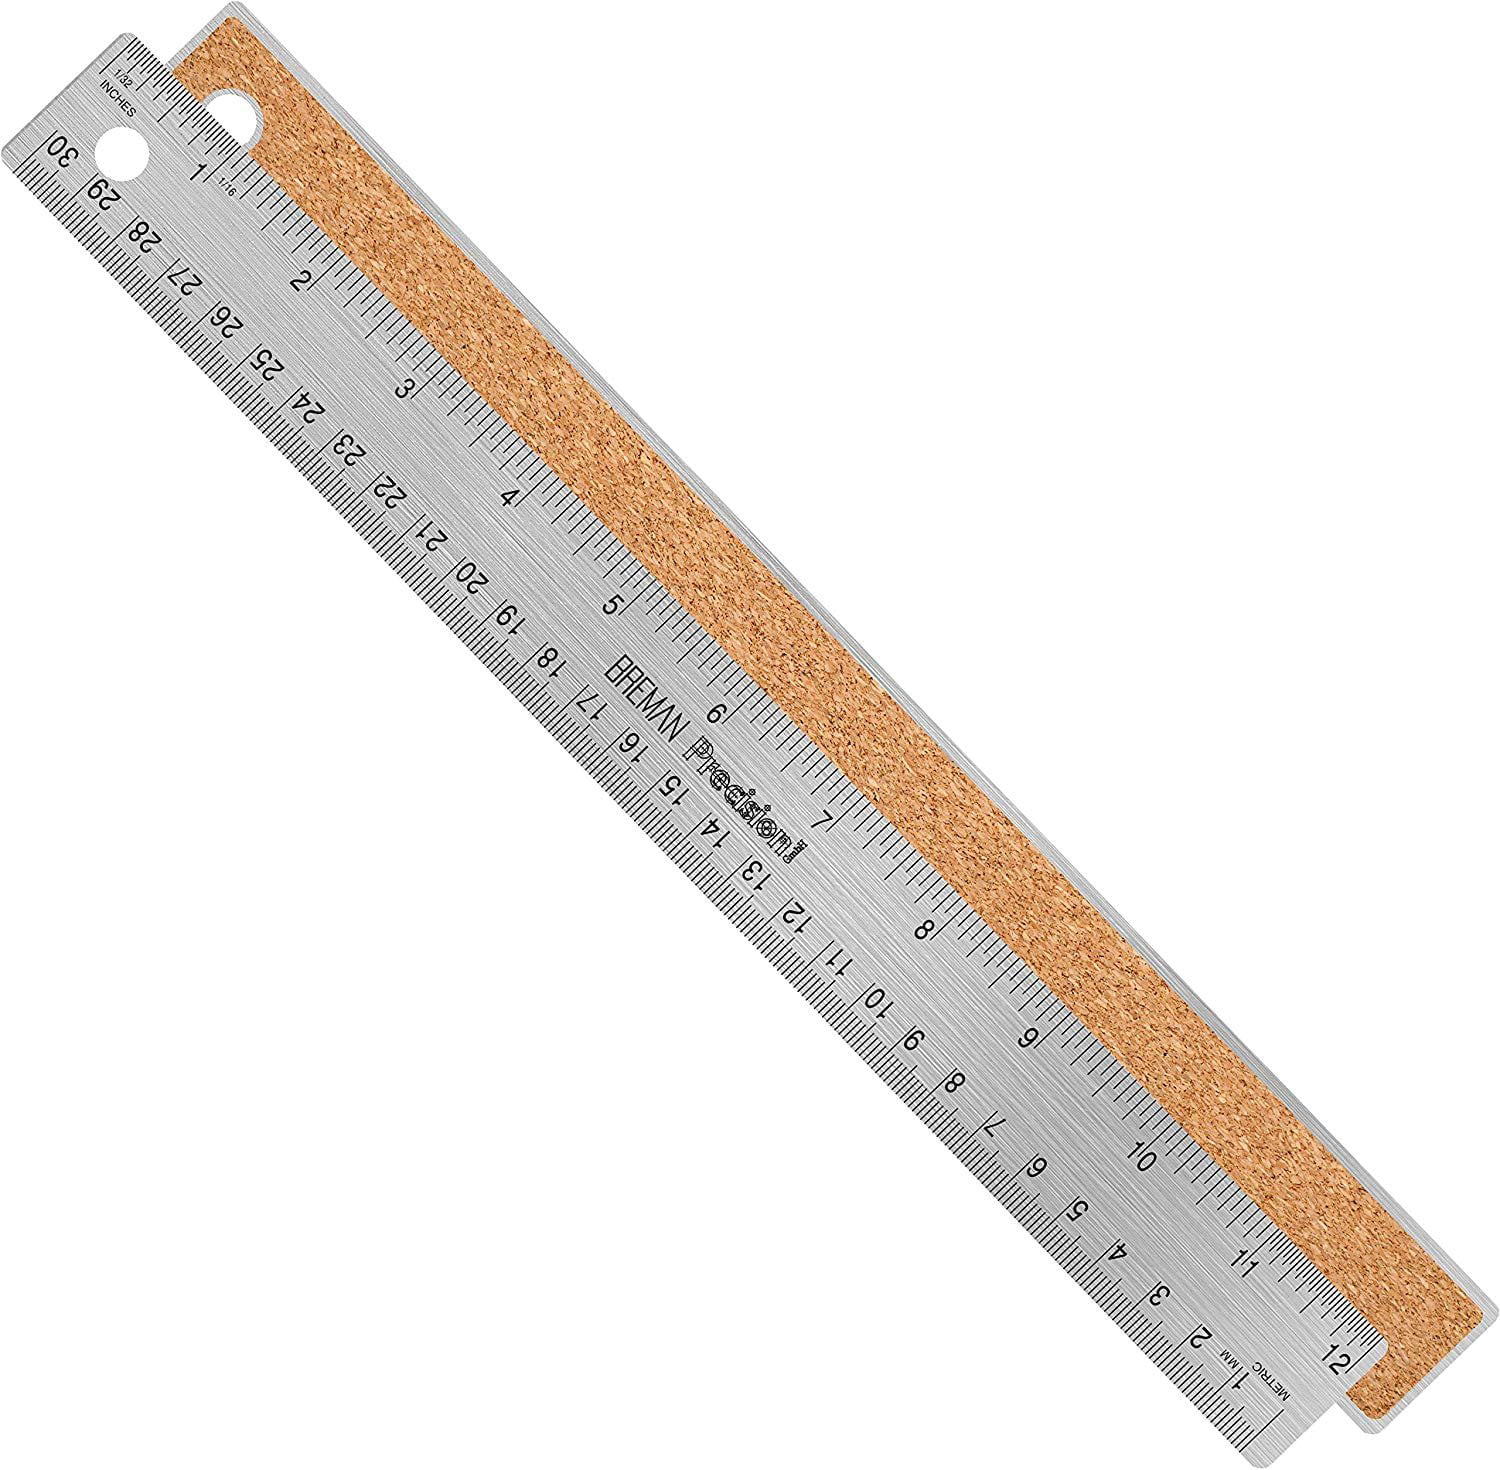 Breman Precision Stainless Steel Rulers Inch Metric Flexible NonSlip 24 In 2PK